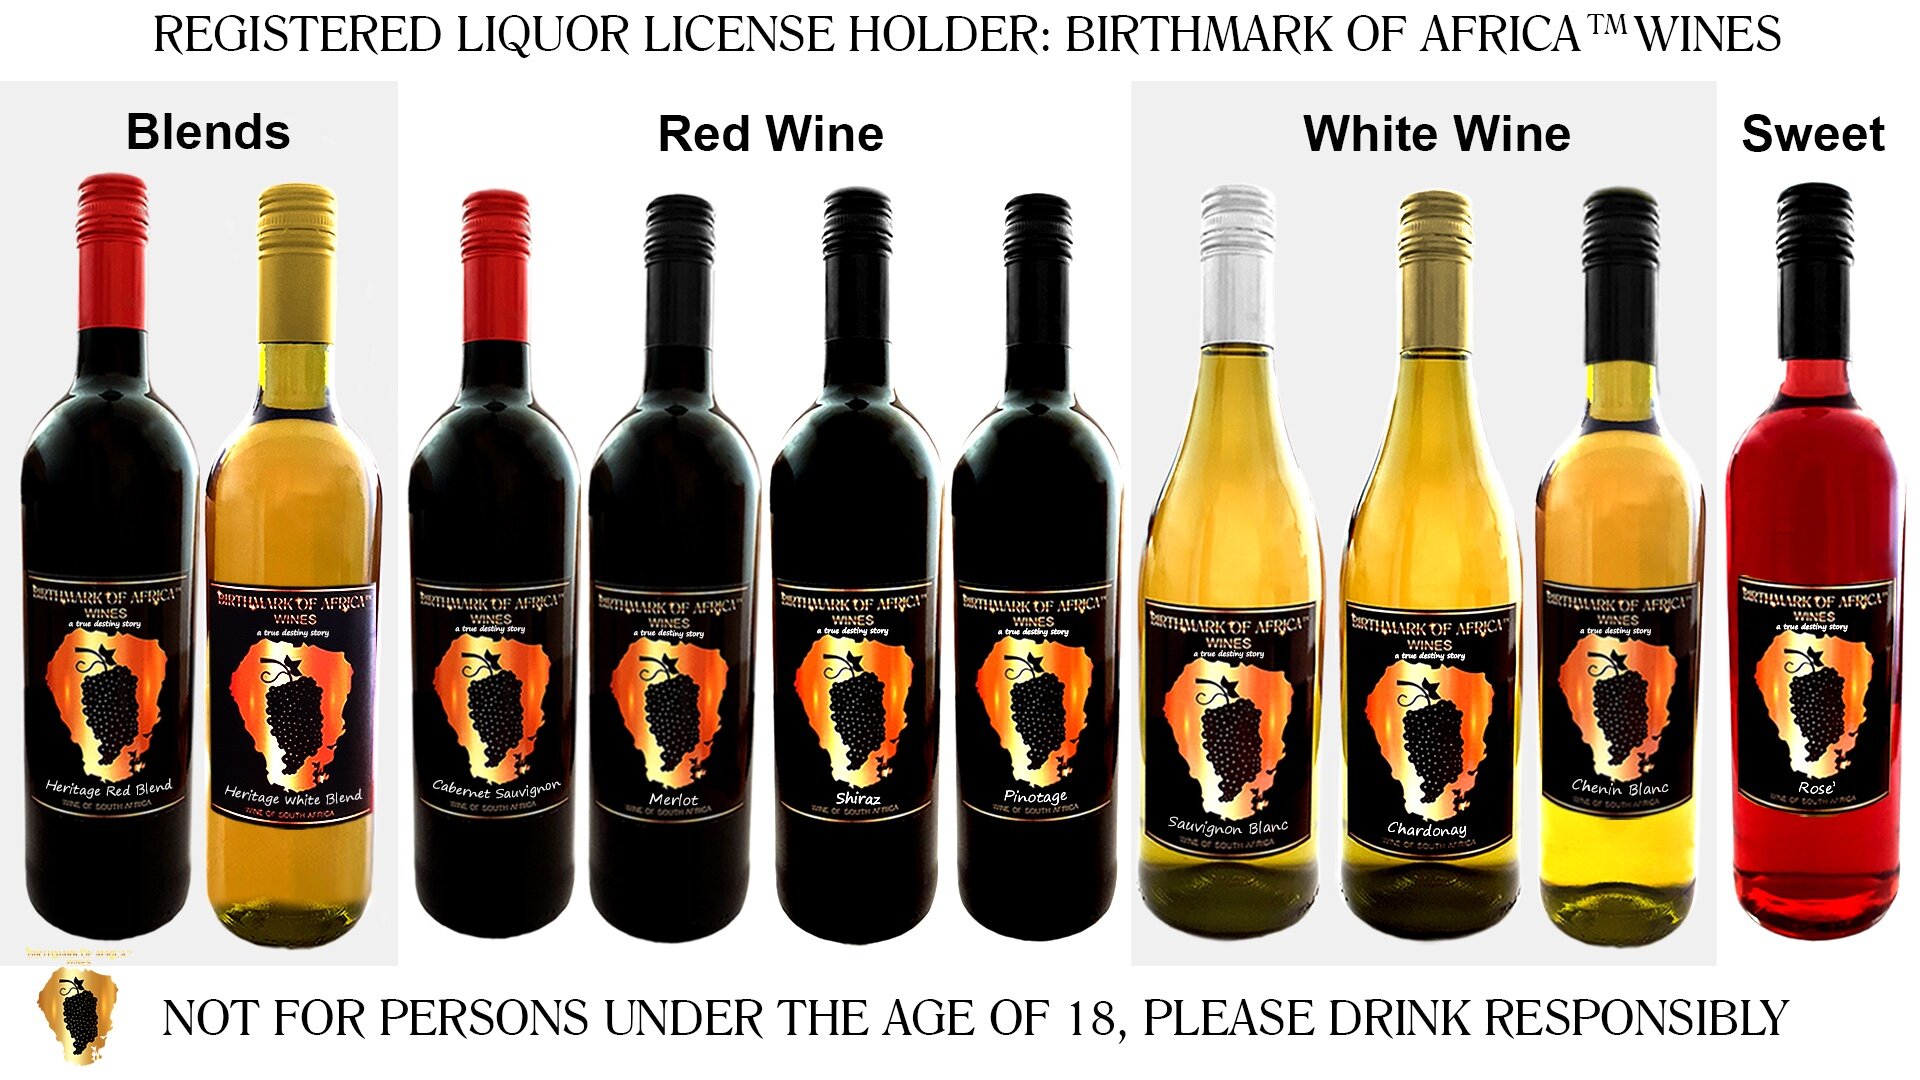 Birthmark of Africa wine collection pic.jpg